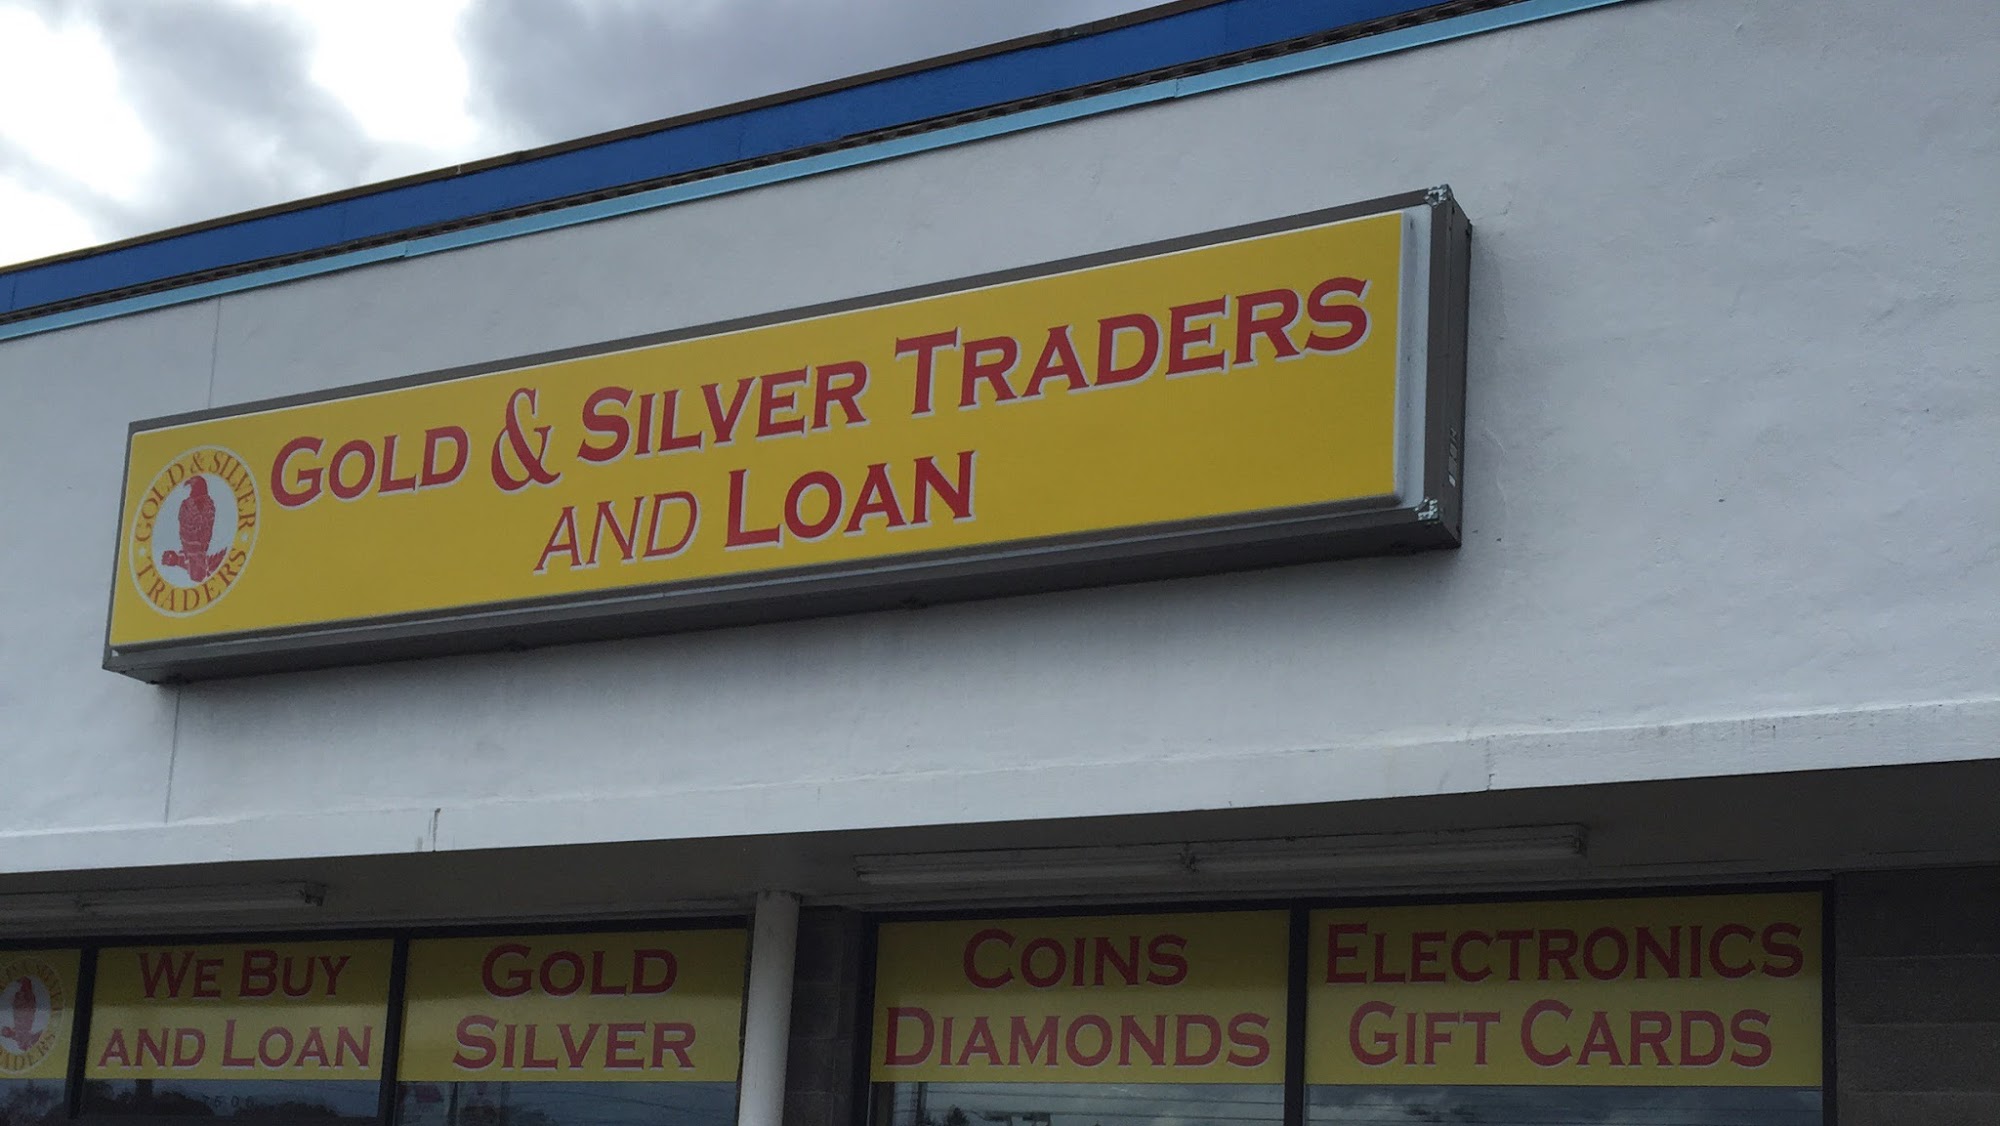 Tacoma Gold and Silver